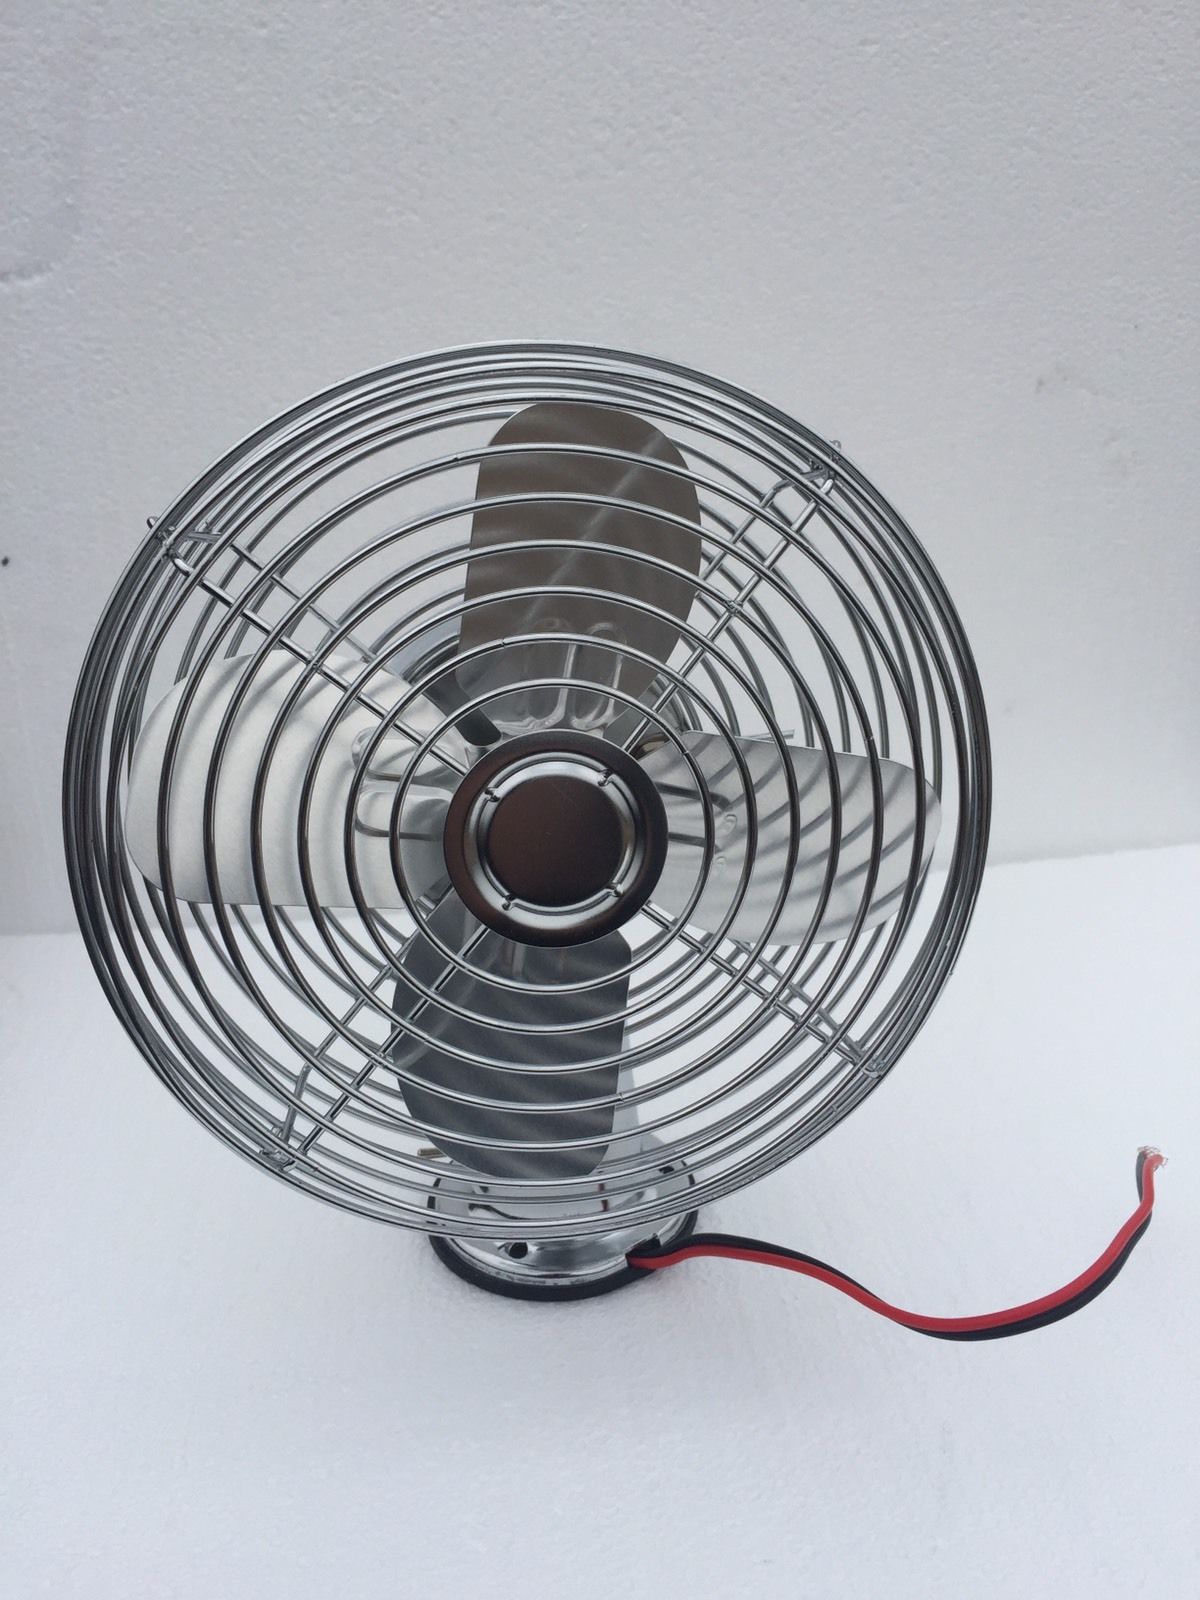 Newer JD - Cab air (A/C, Heat) fan does not blow - TractorByNet